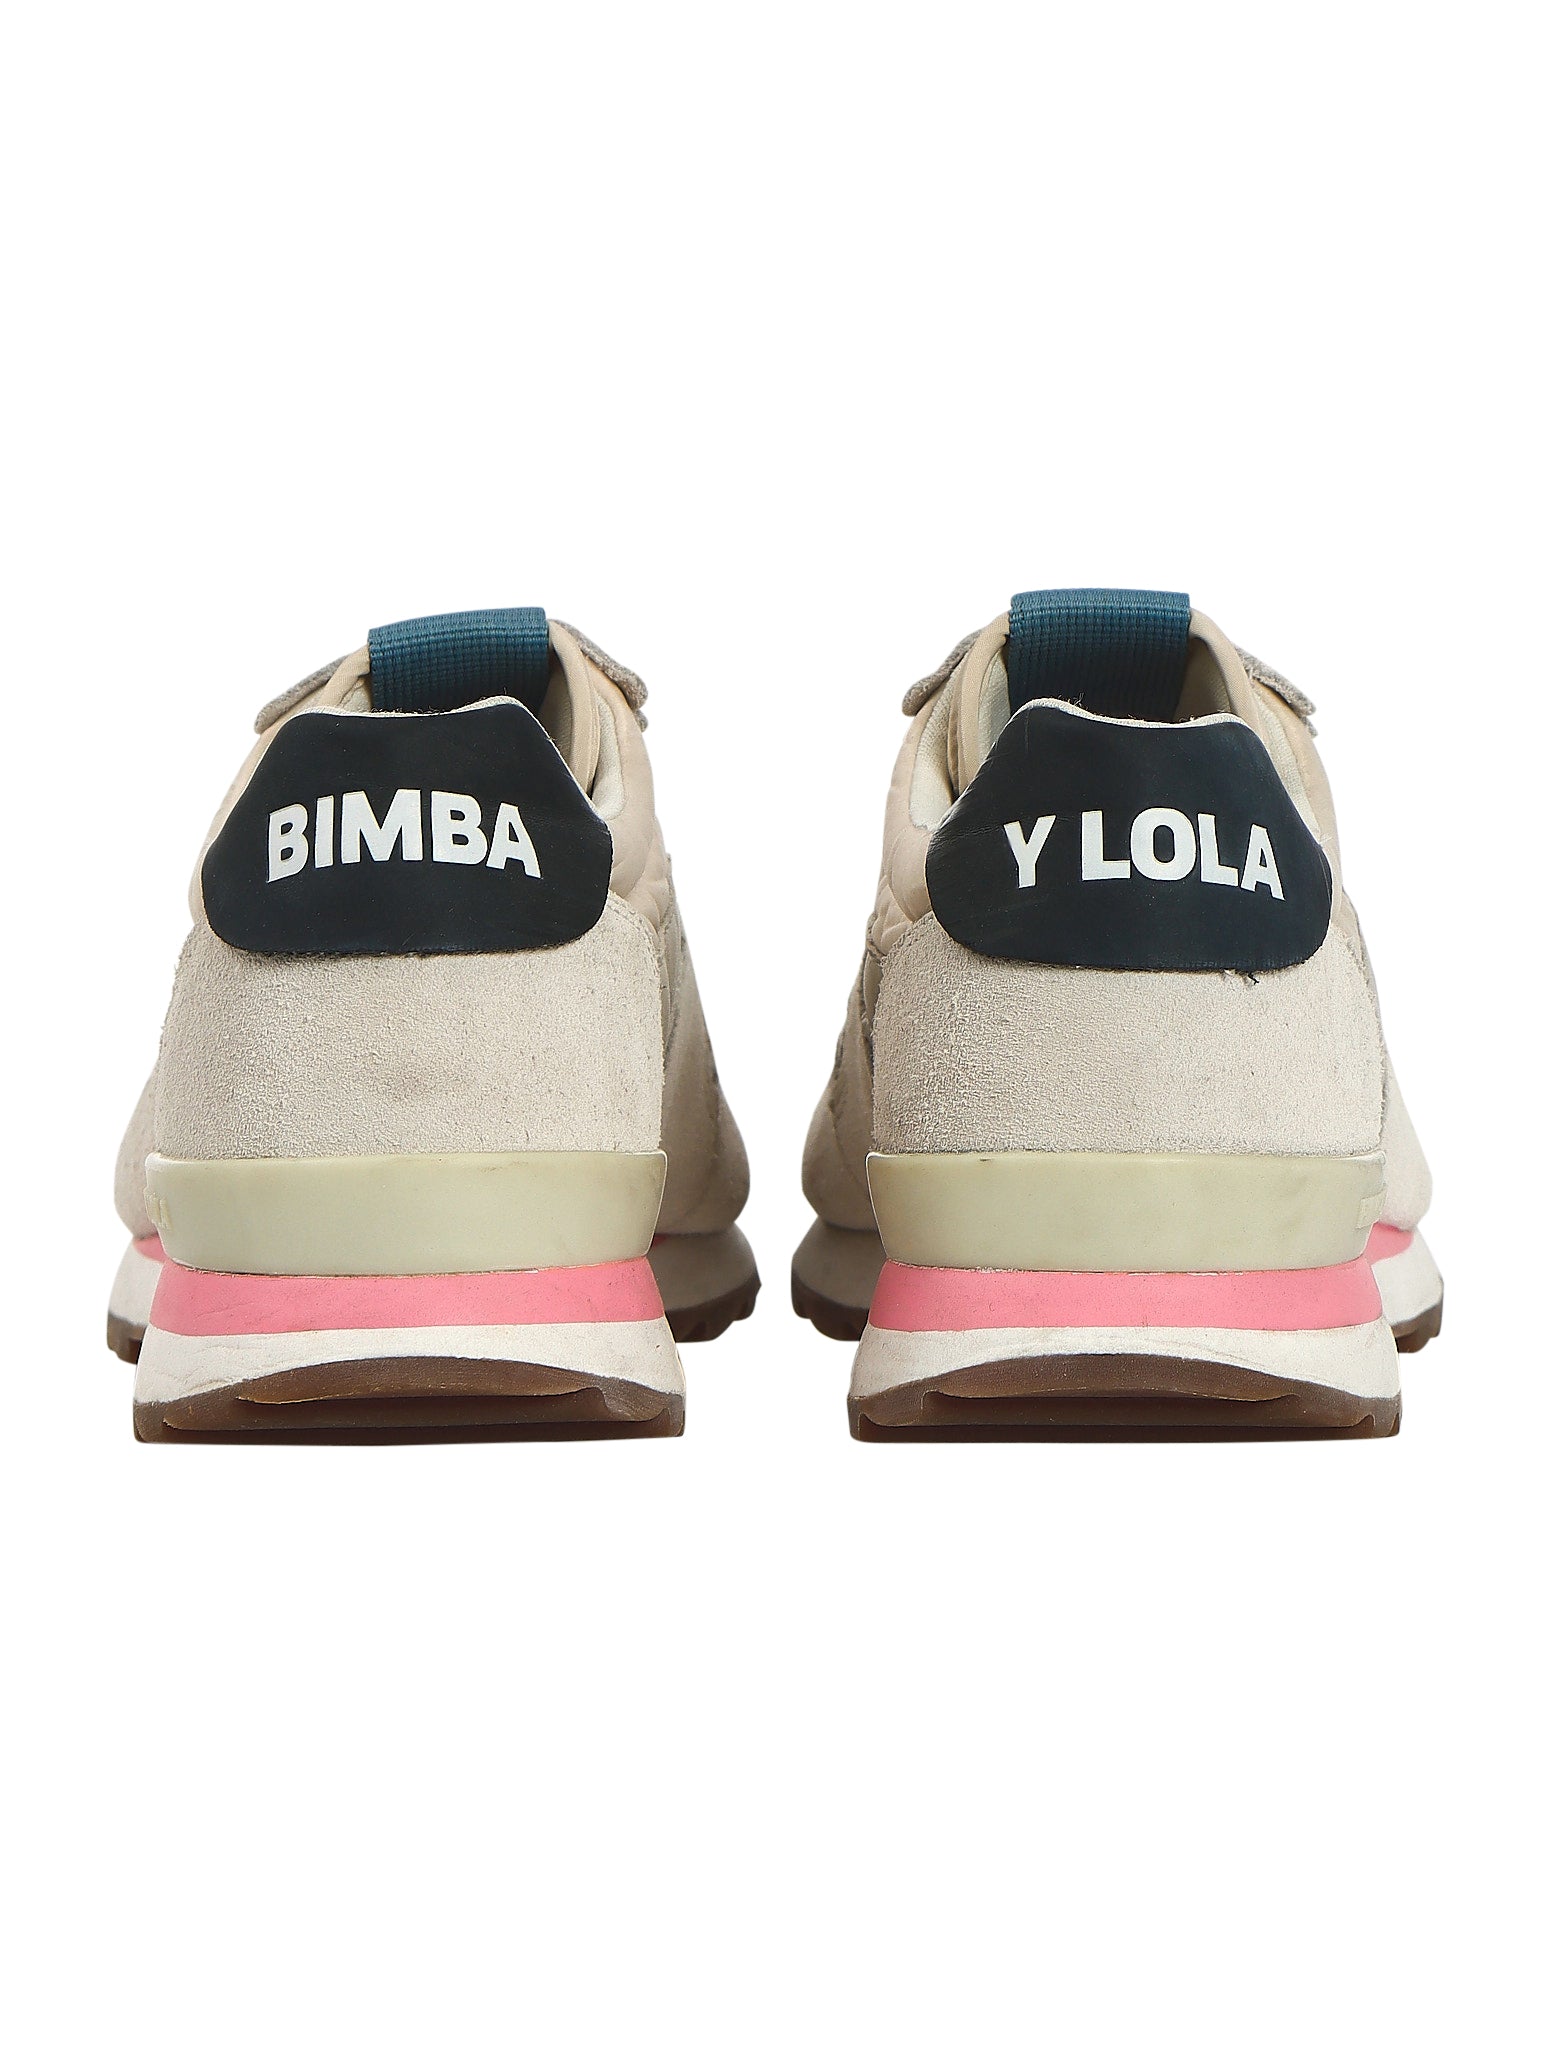 Women's Bimba y Lola Shoes, New & Used